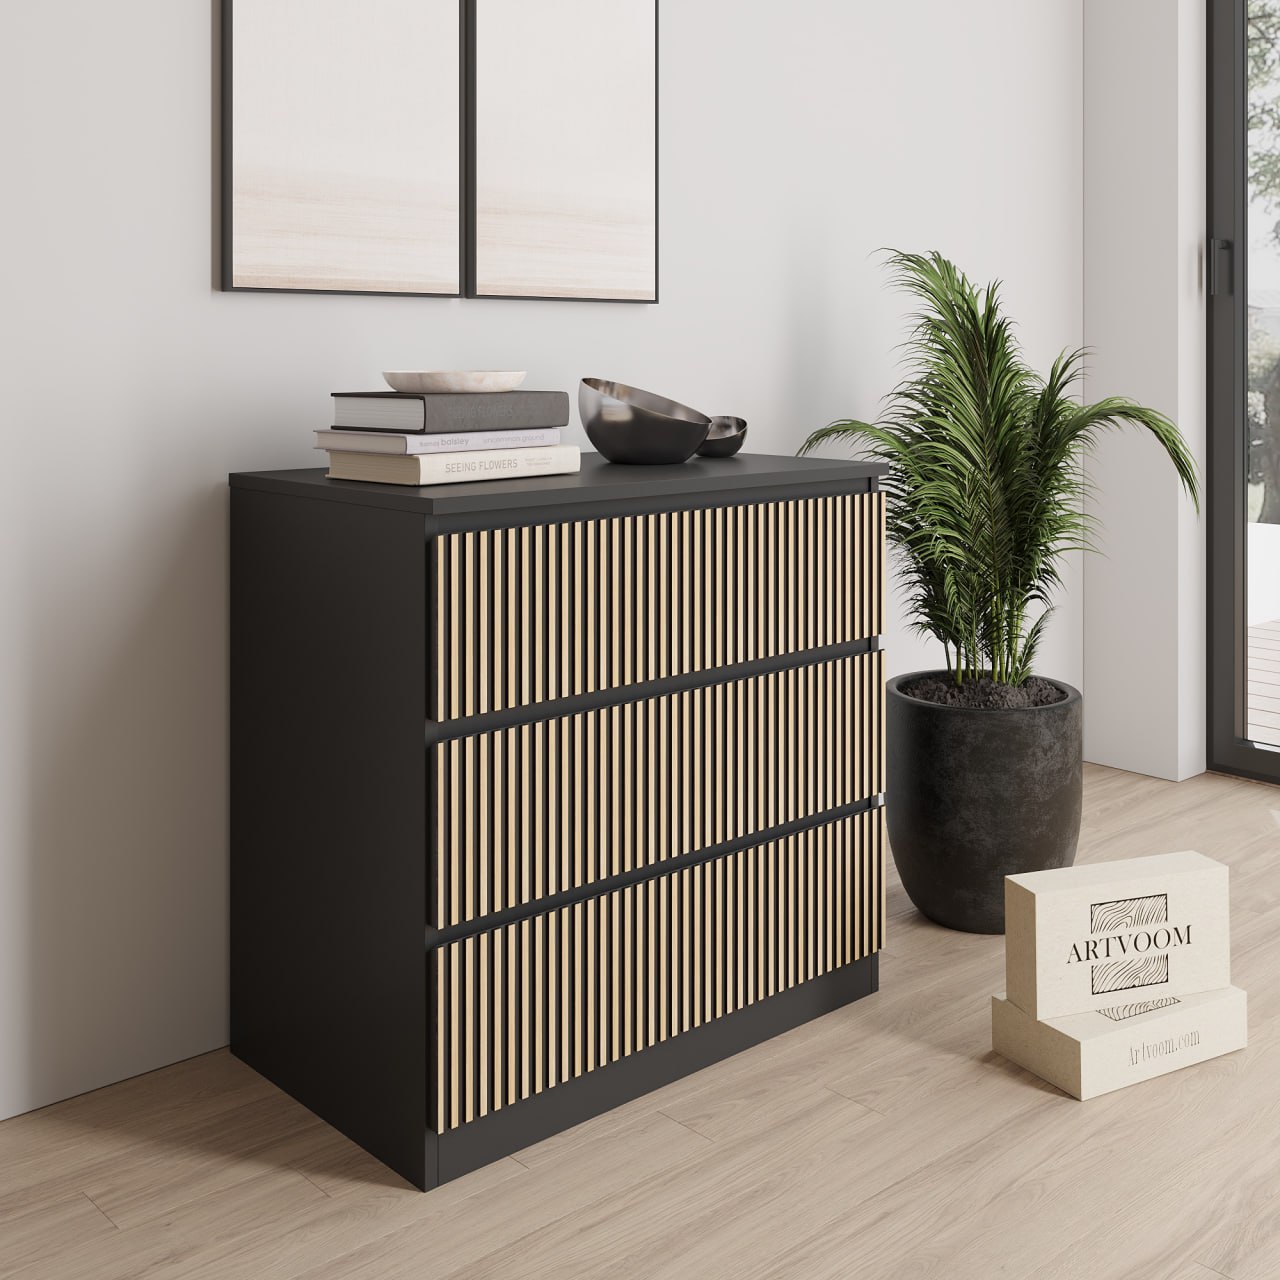 Artvoom overlay wooden slats panels for decorating furniture dressers for  IKEA® malm